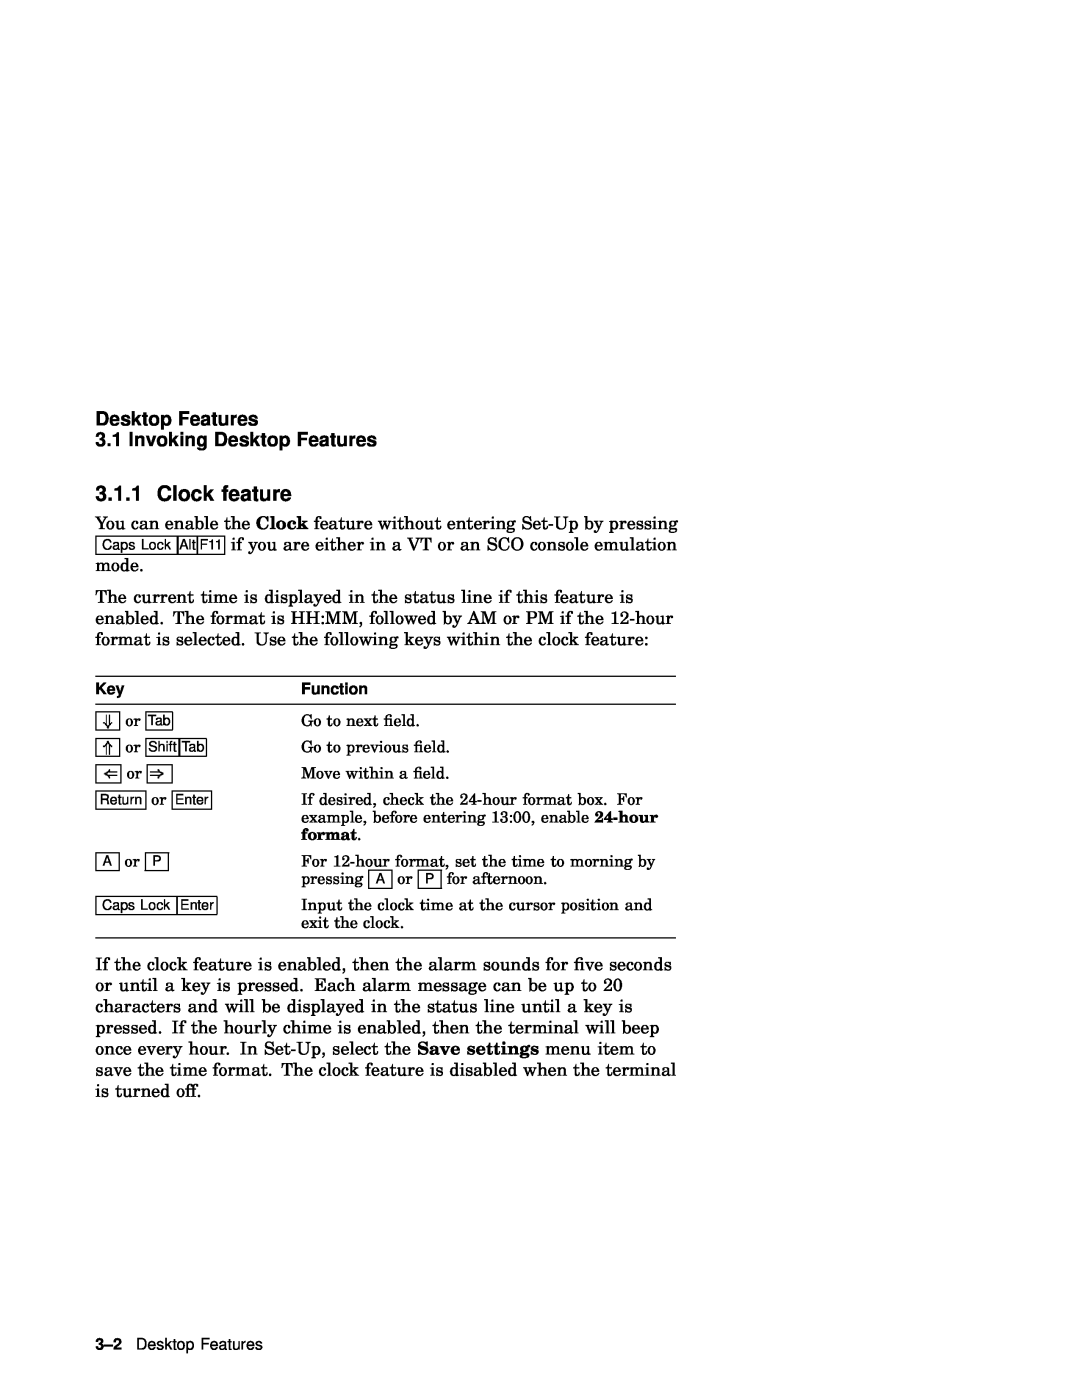 IBM WS525 manual Clock feature, Desktop Features 3.1 Invoking Desktop Features 